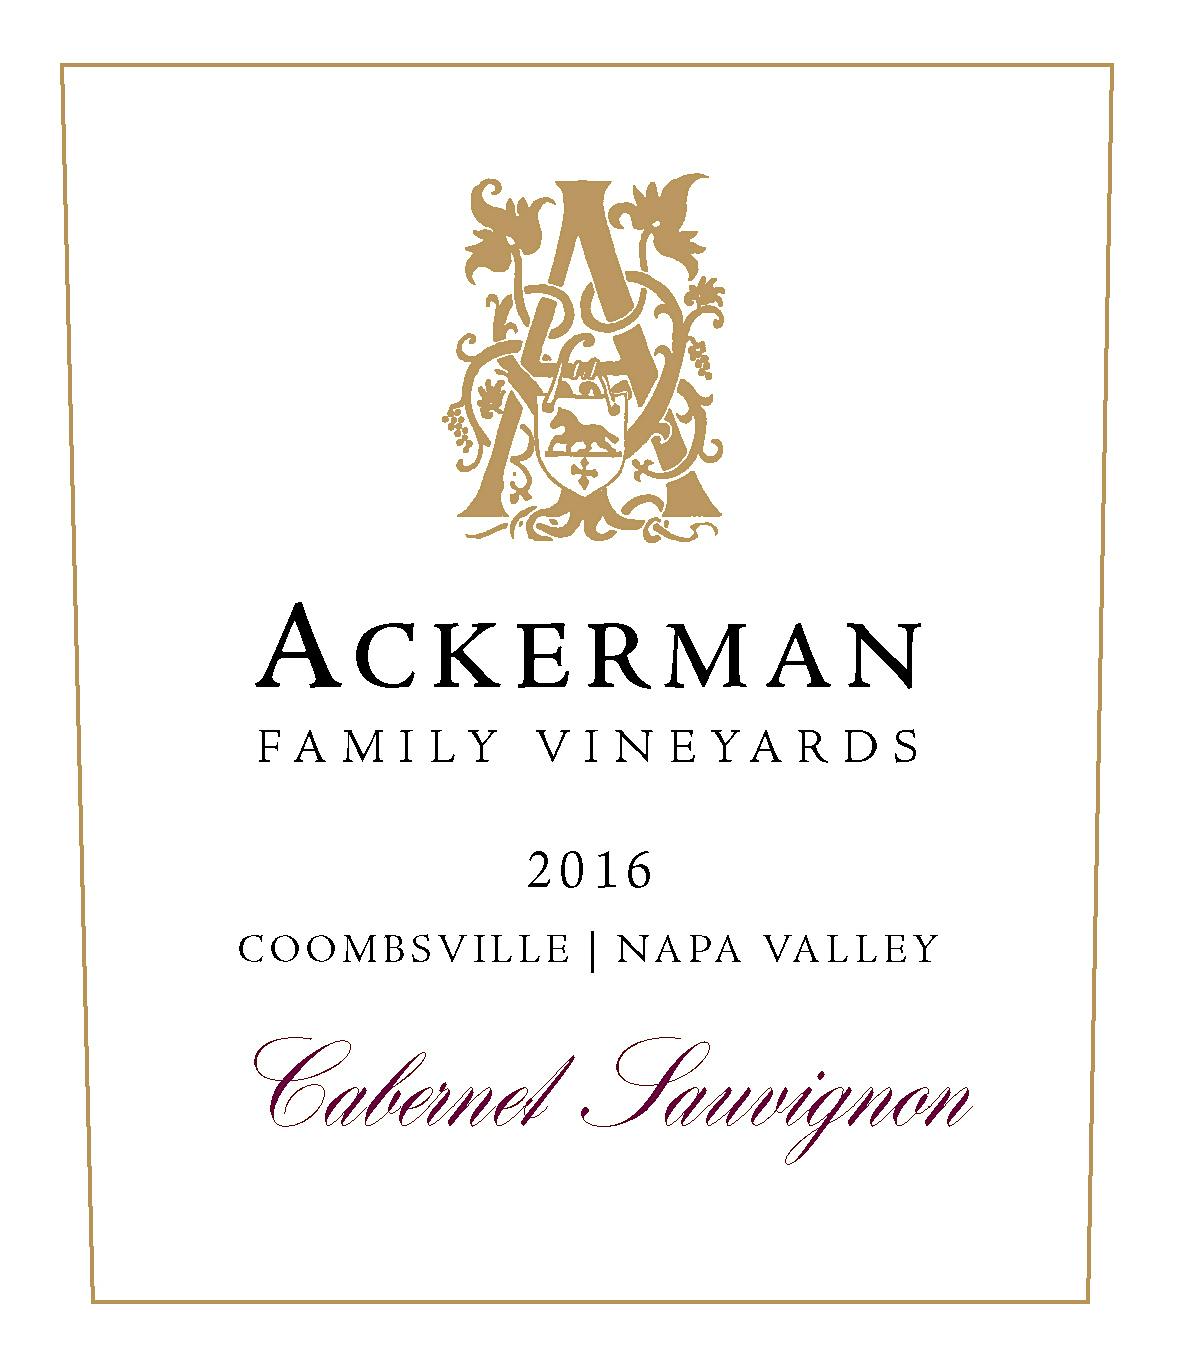 Label for Ackerman